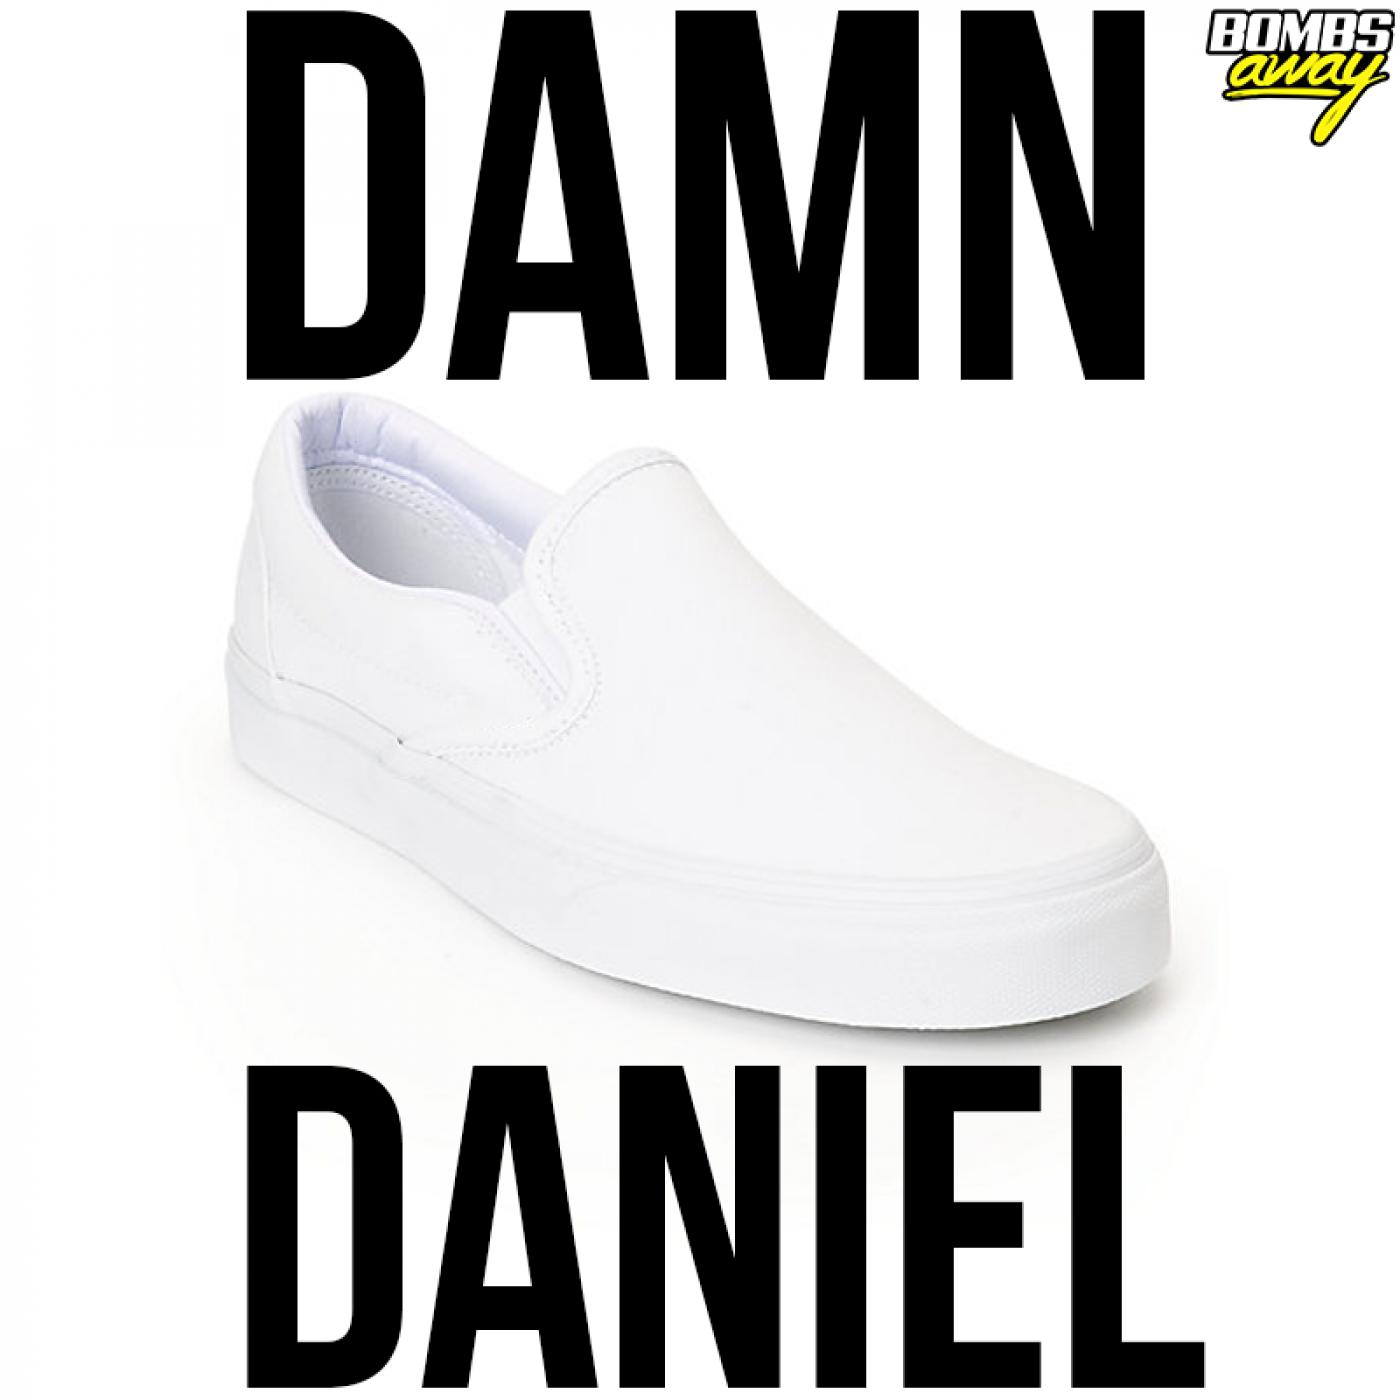 Damn Daniel (Bombs Away Remix)